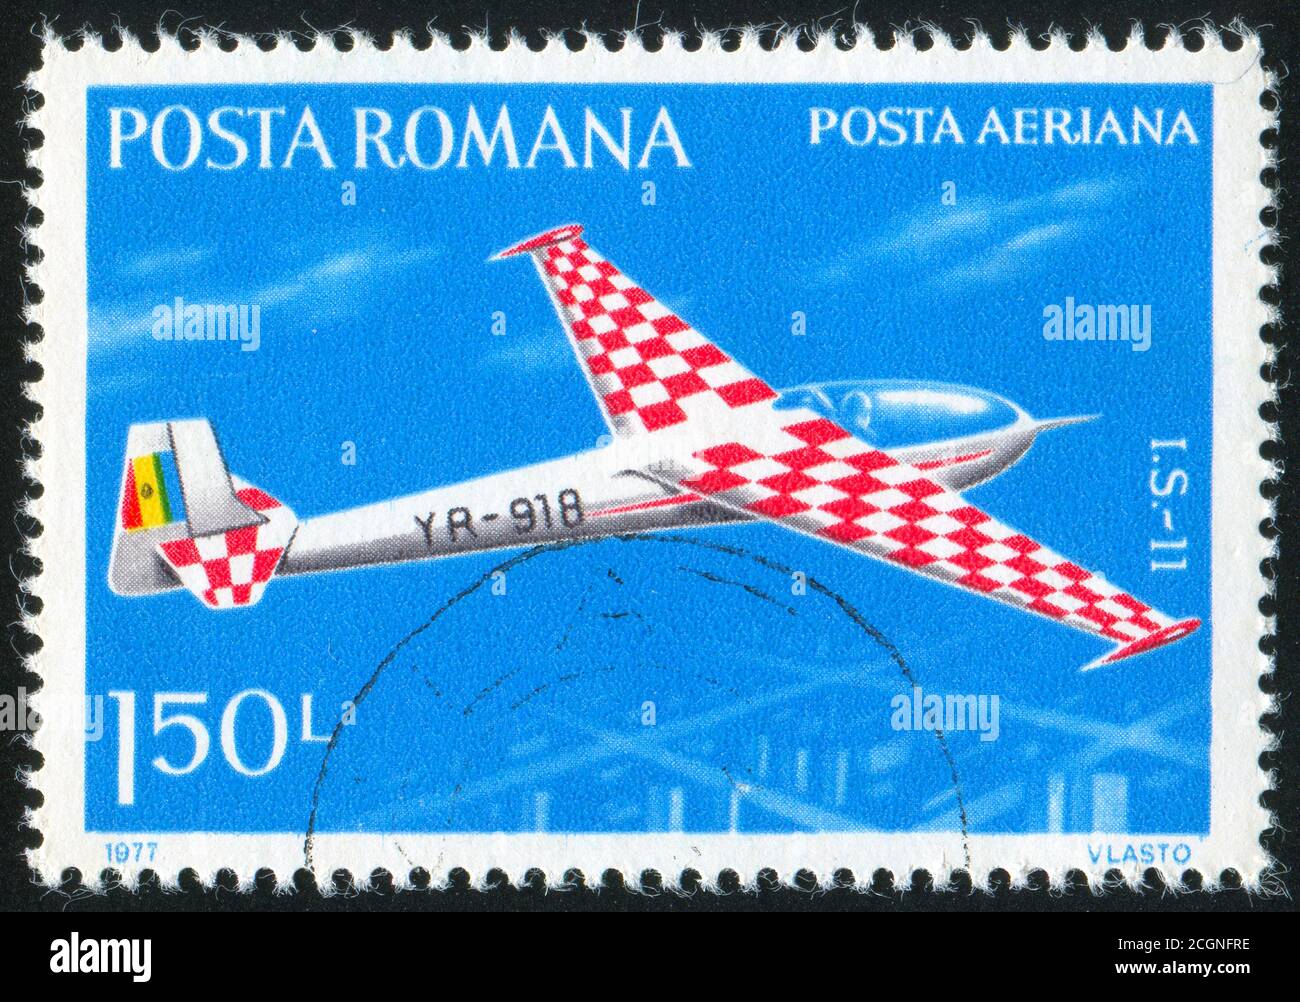 ROMANIA - CIRCA 1977: stamp printed by Romania, show plane, circa 1977. Stock Photo